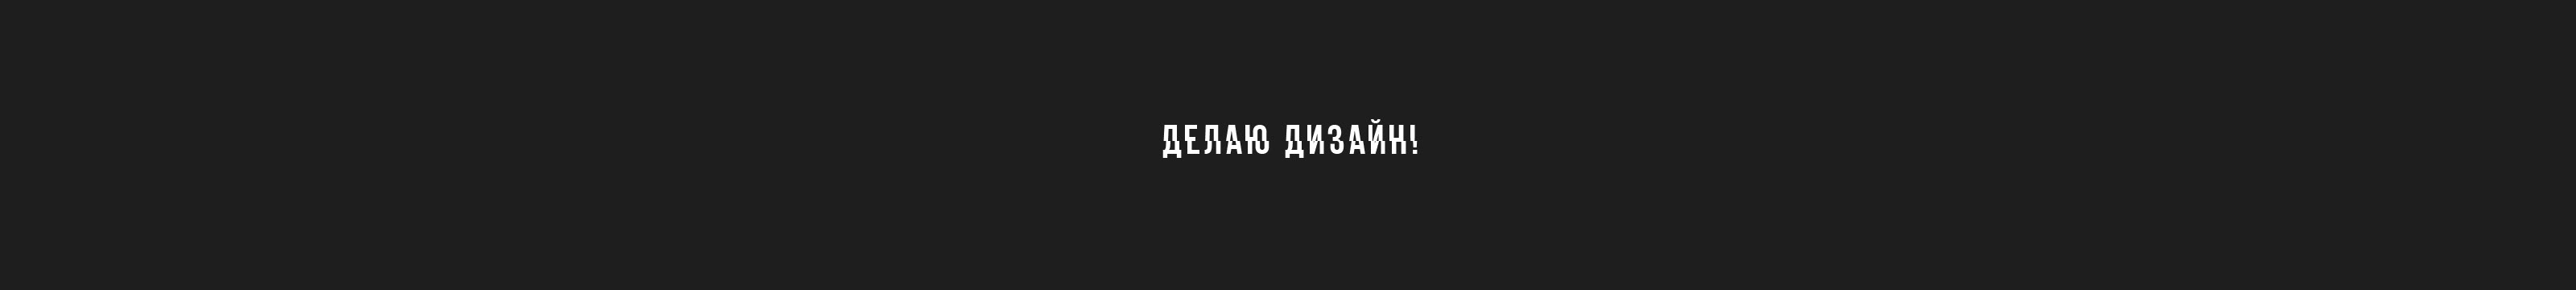 Artem Zyryanov's profile banner